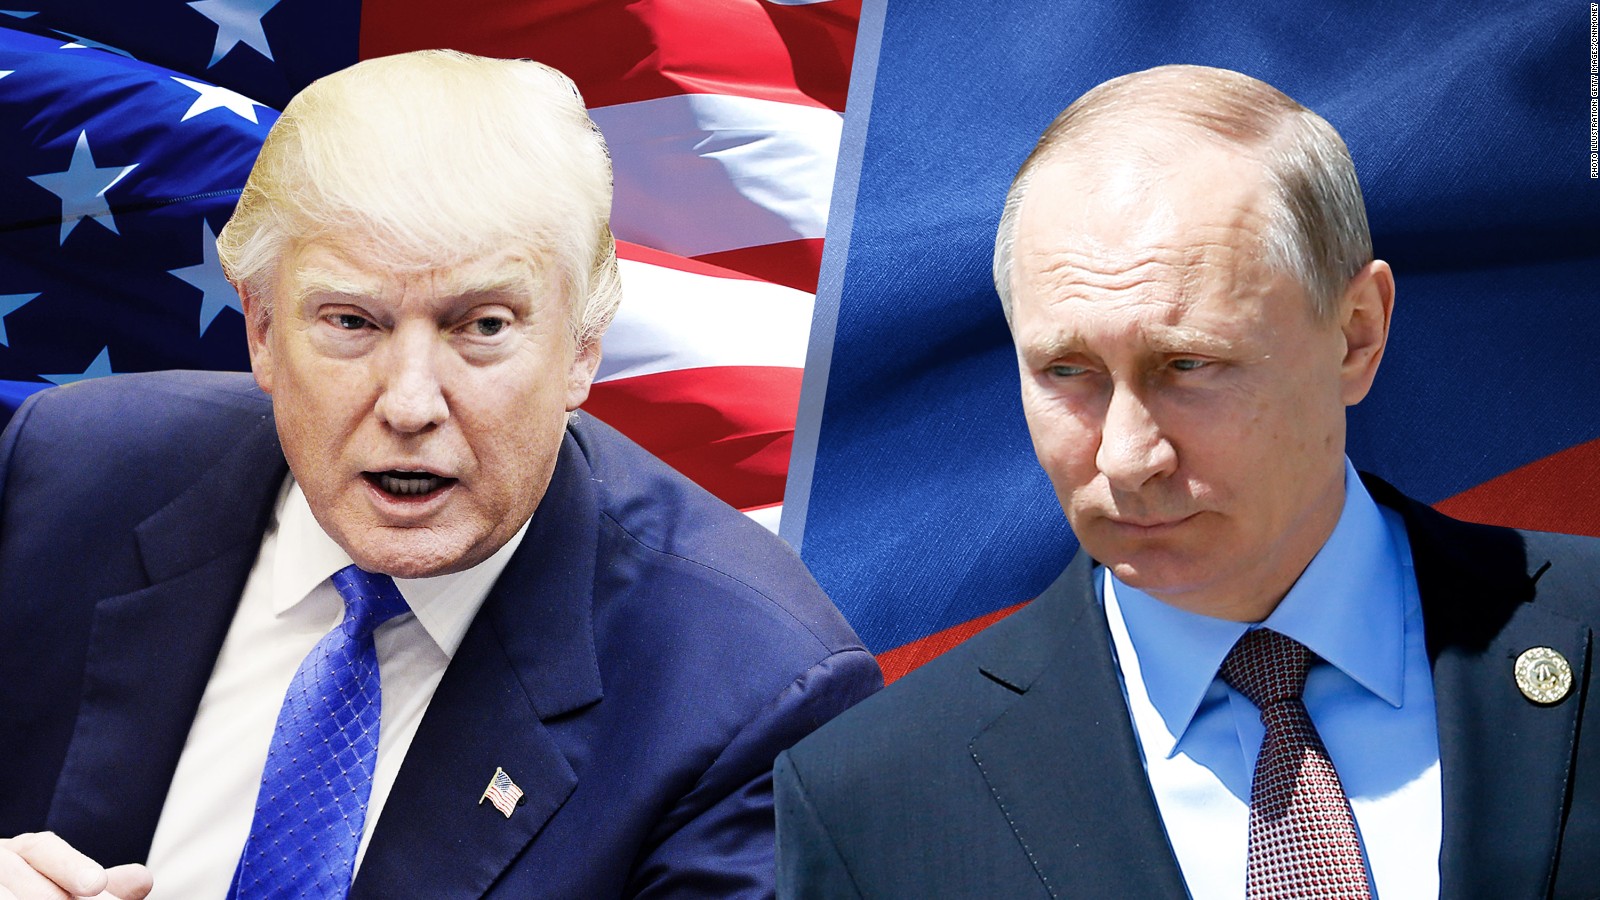 Stretnutia Putina a Trumpa: Dohodli sme sa, že sme sa na ničom nedohodli